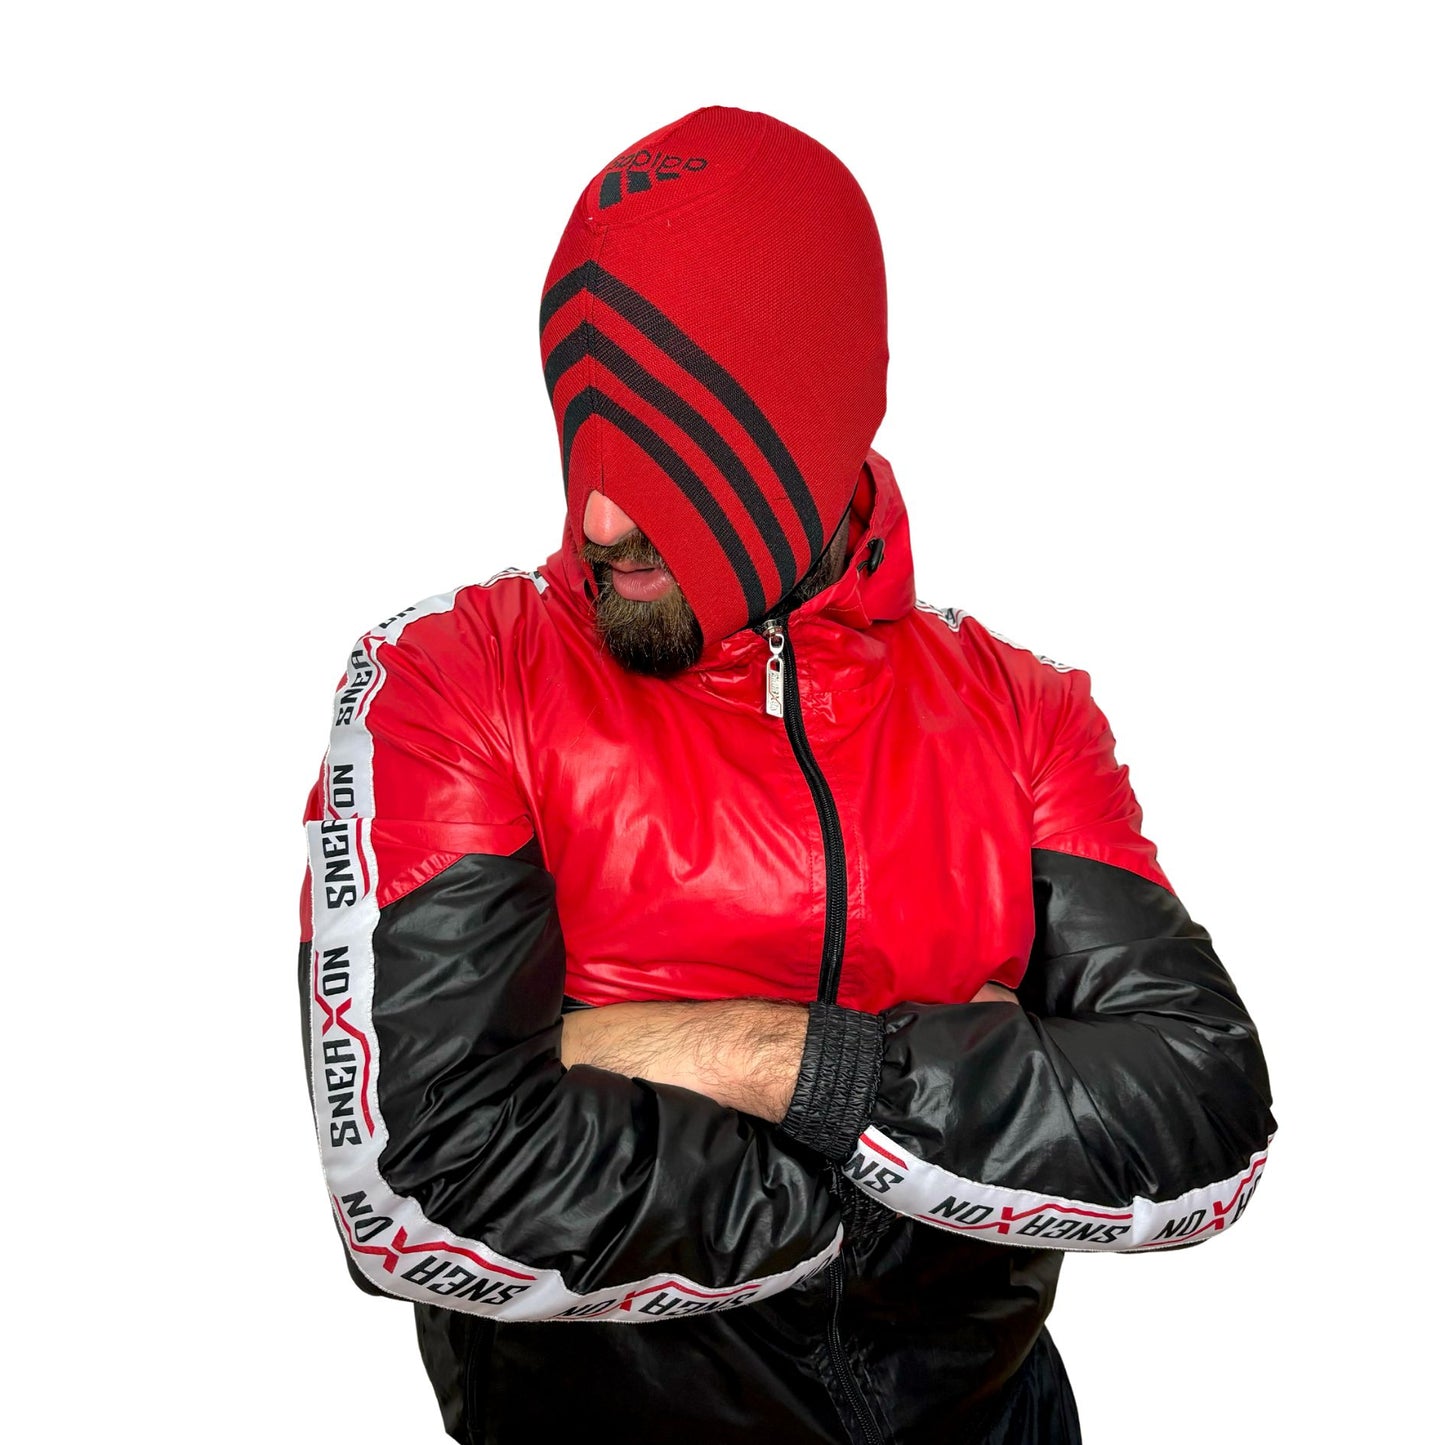 Adidas Originals SOCKsucker Blood Red Mask